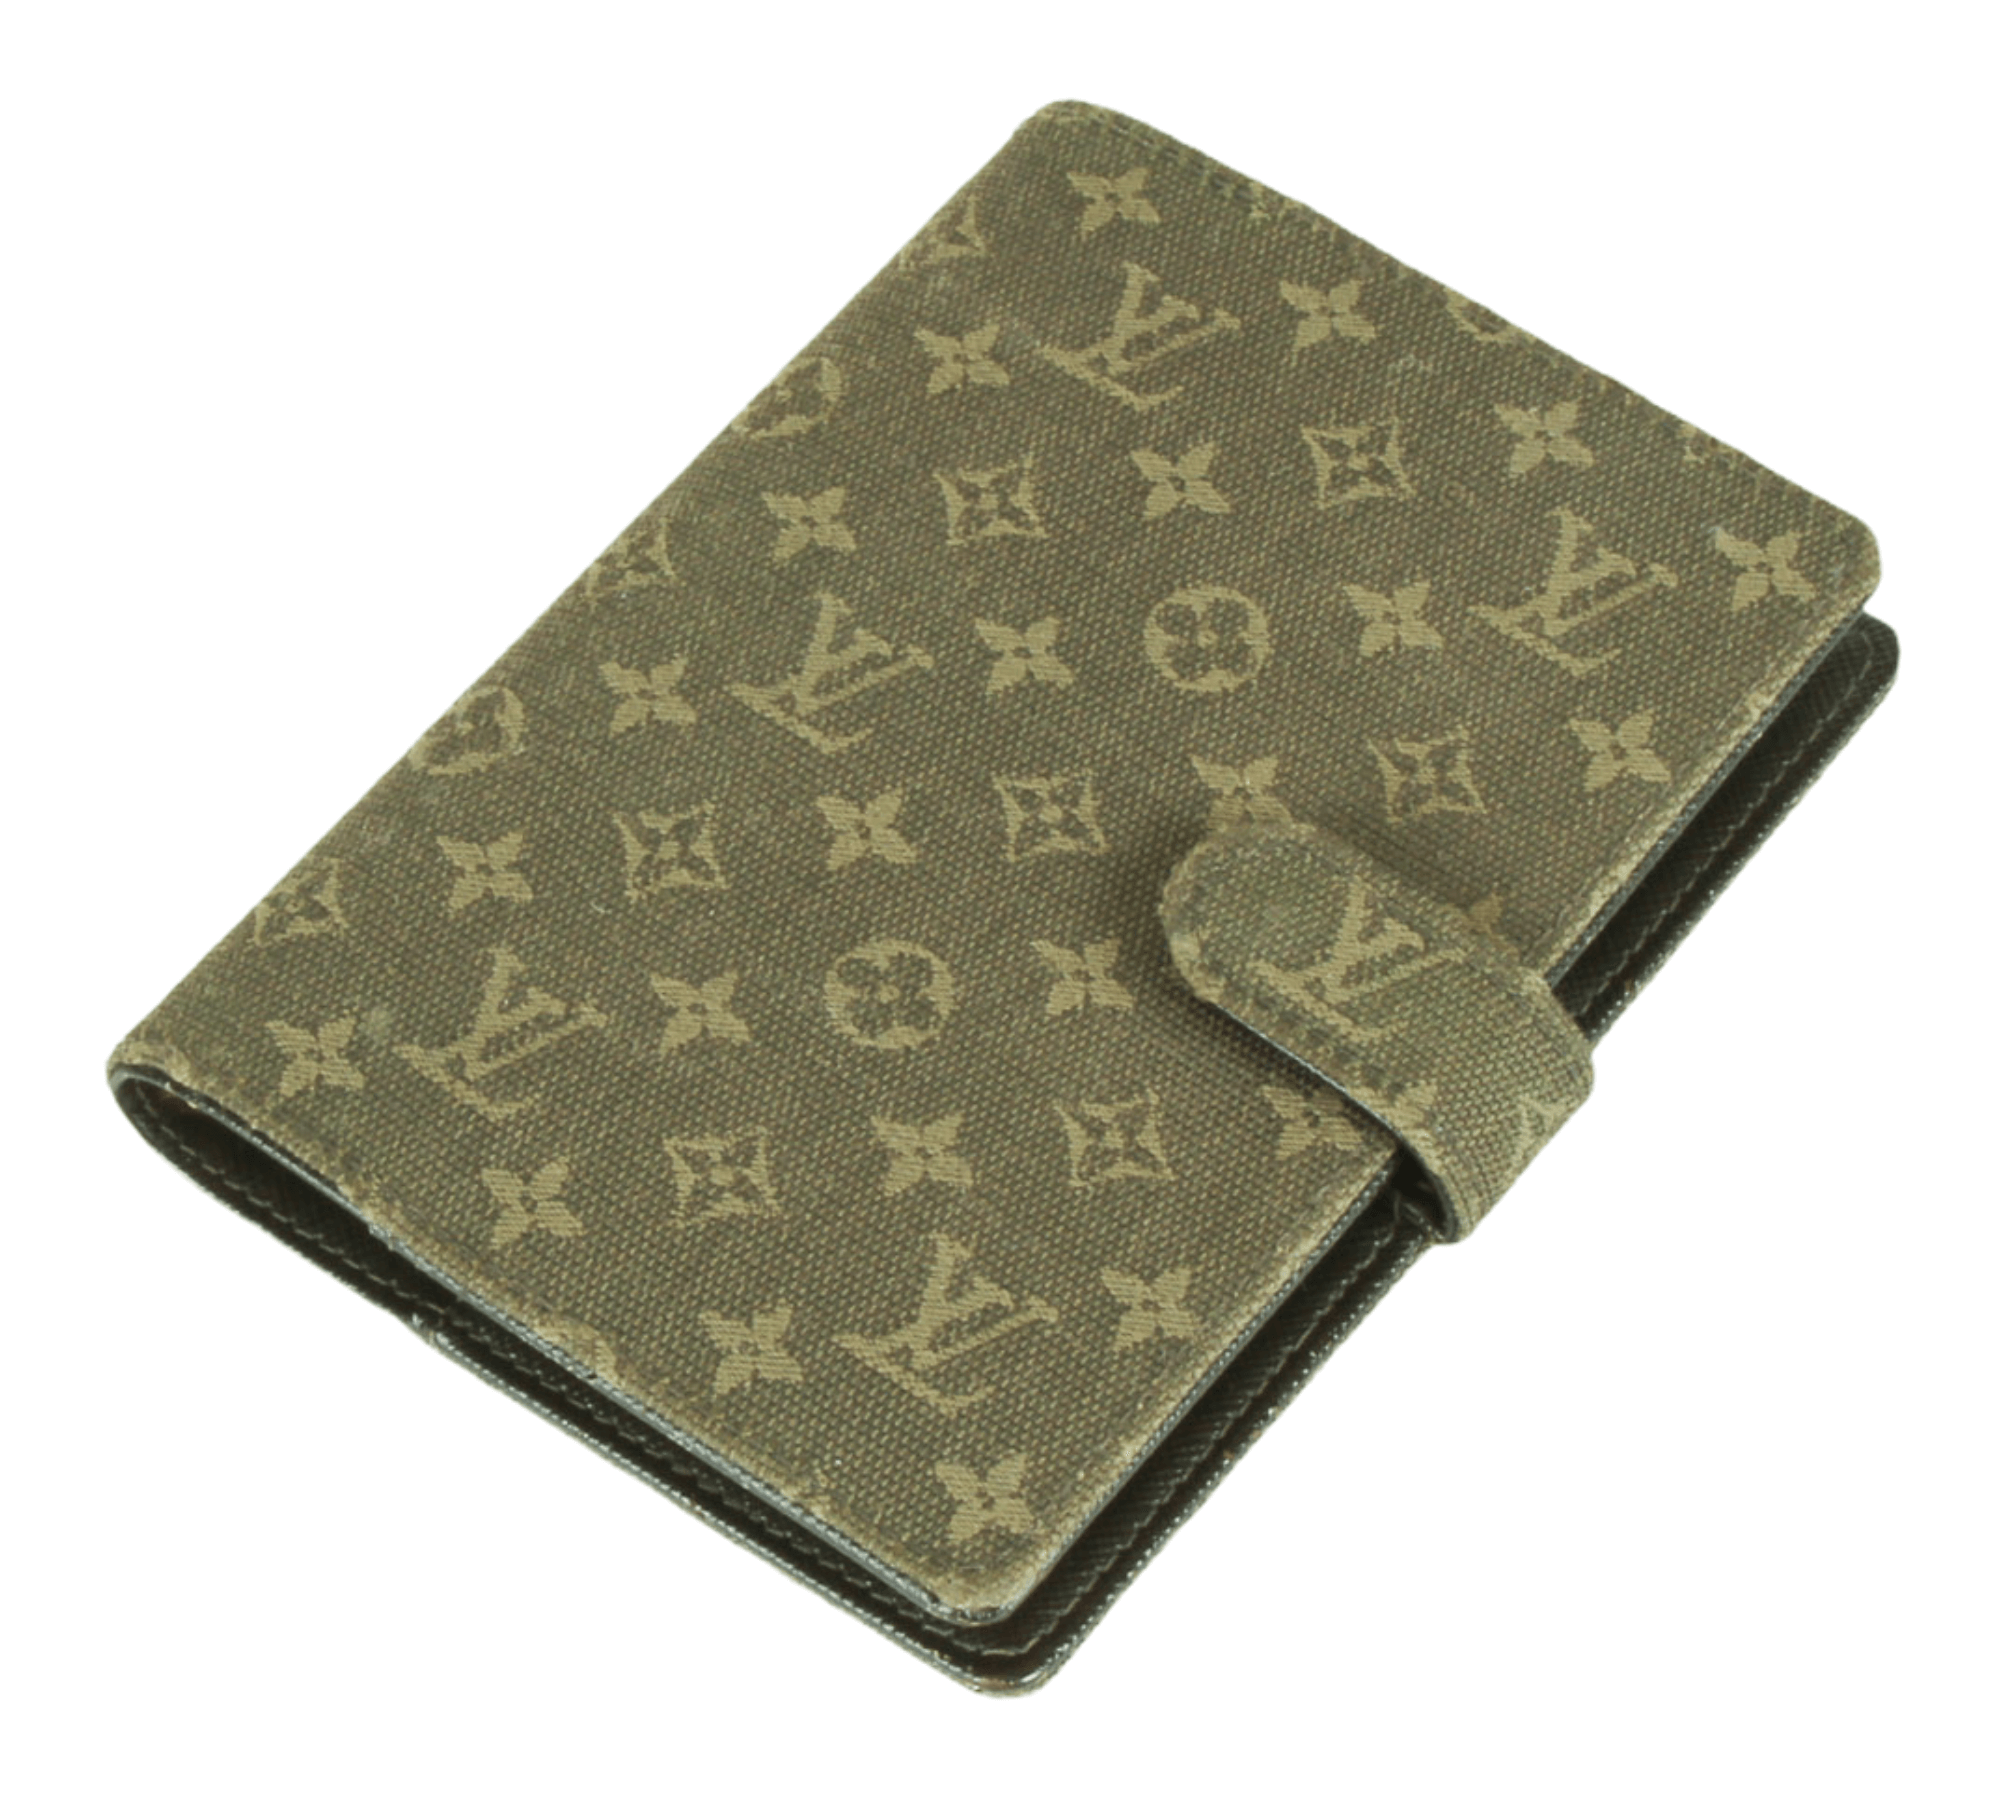 Authentic LOUIS VUITTON Agenda PM notebook cover limited bag PVC #4031